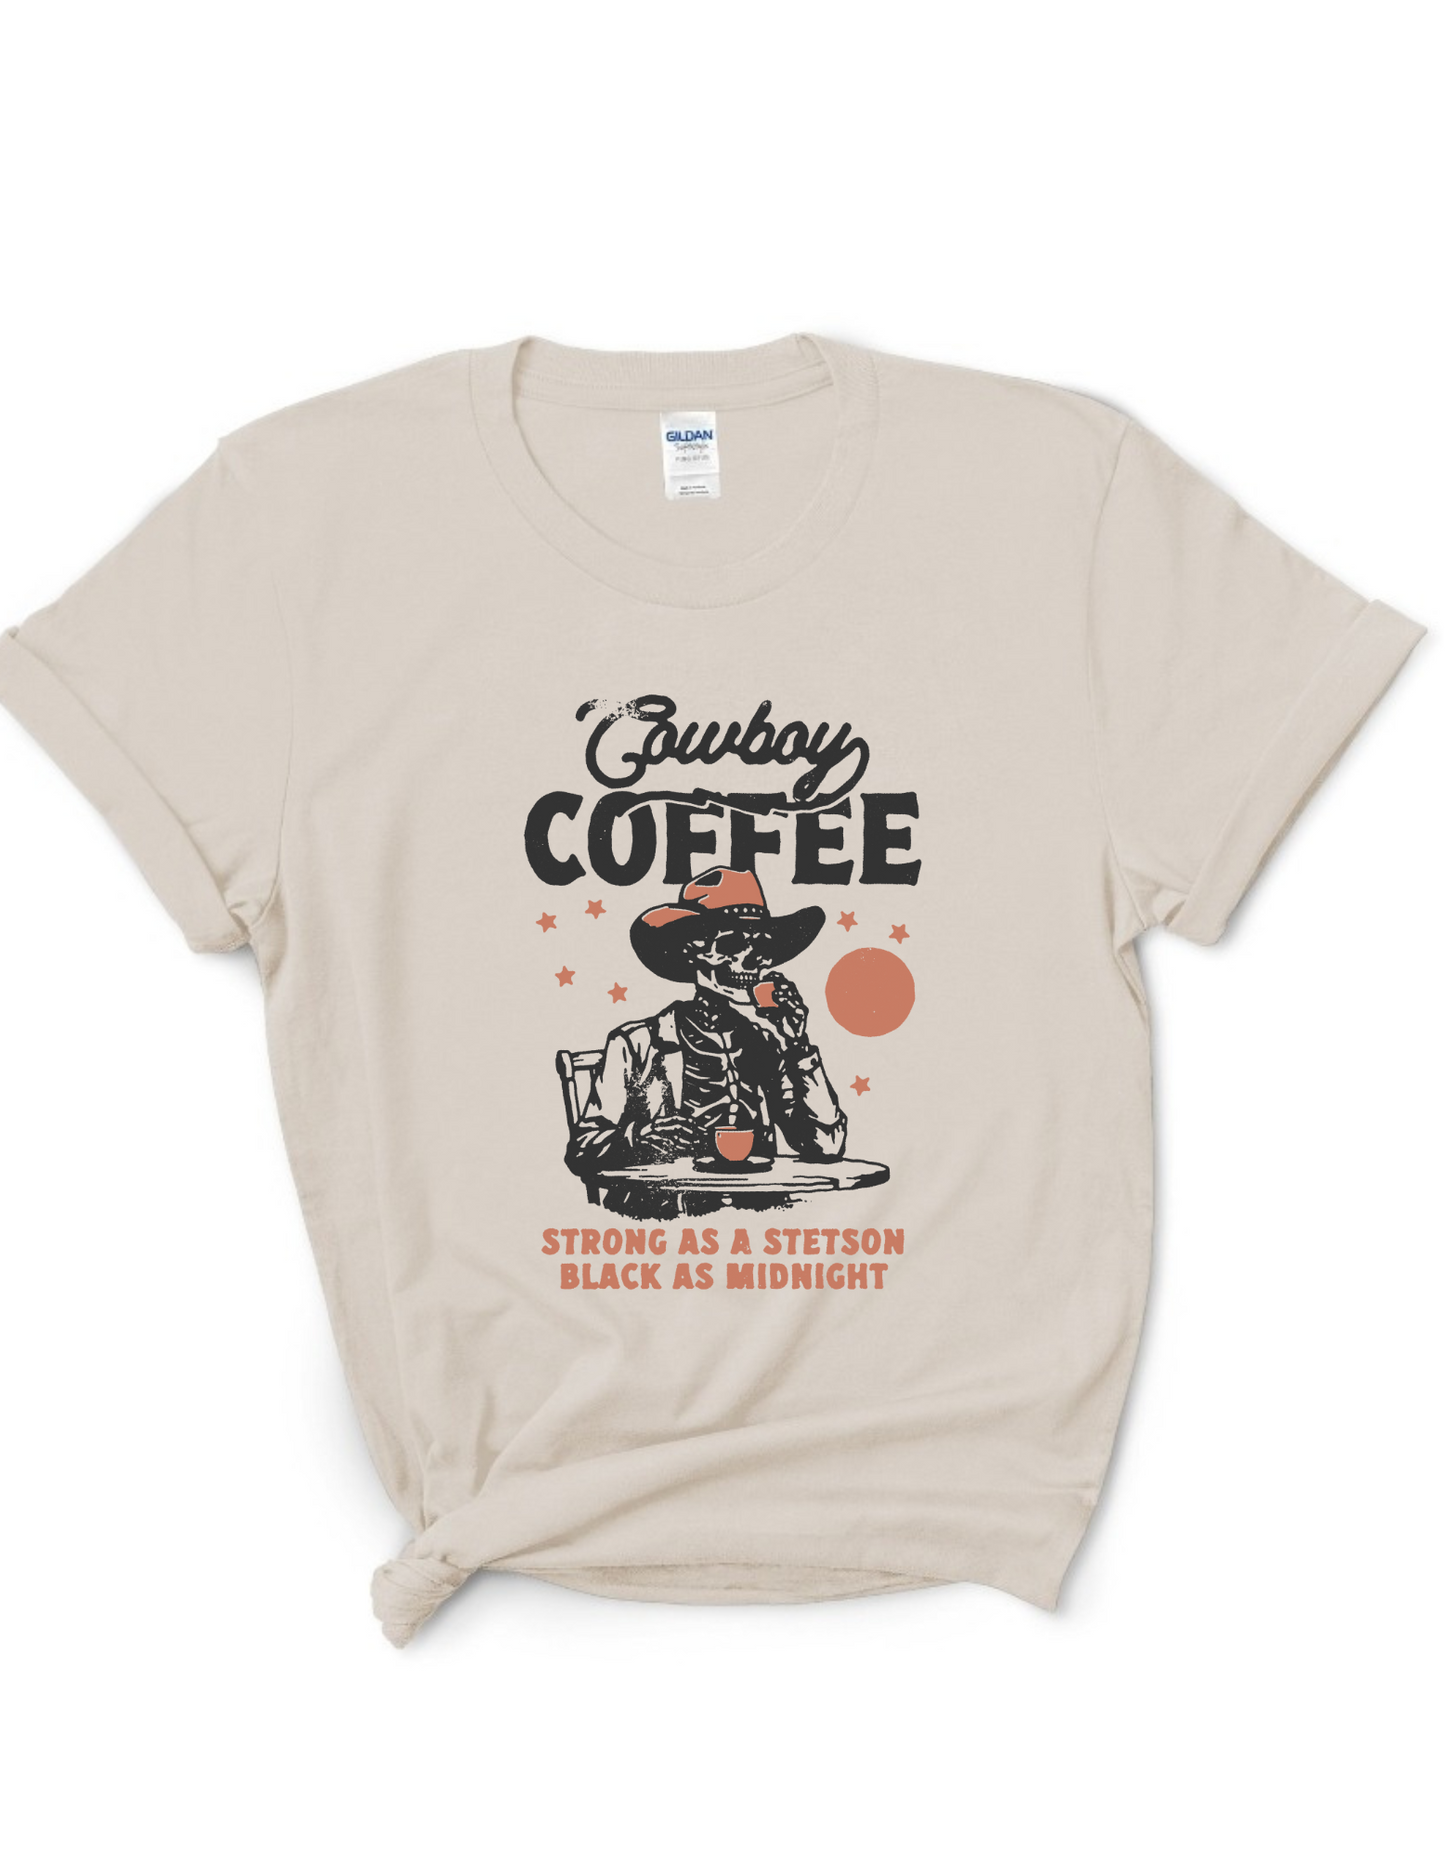 Cowboy coffee graphic tee